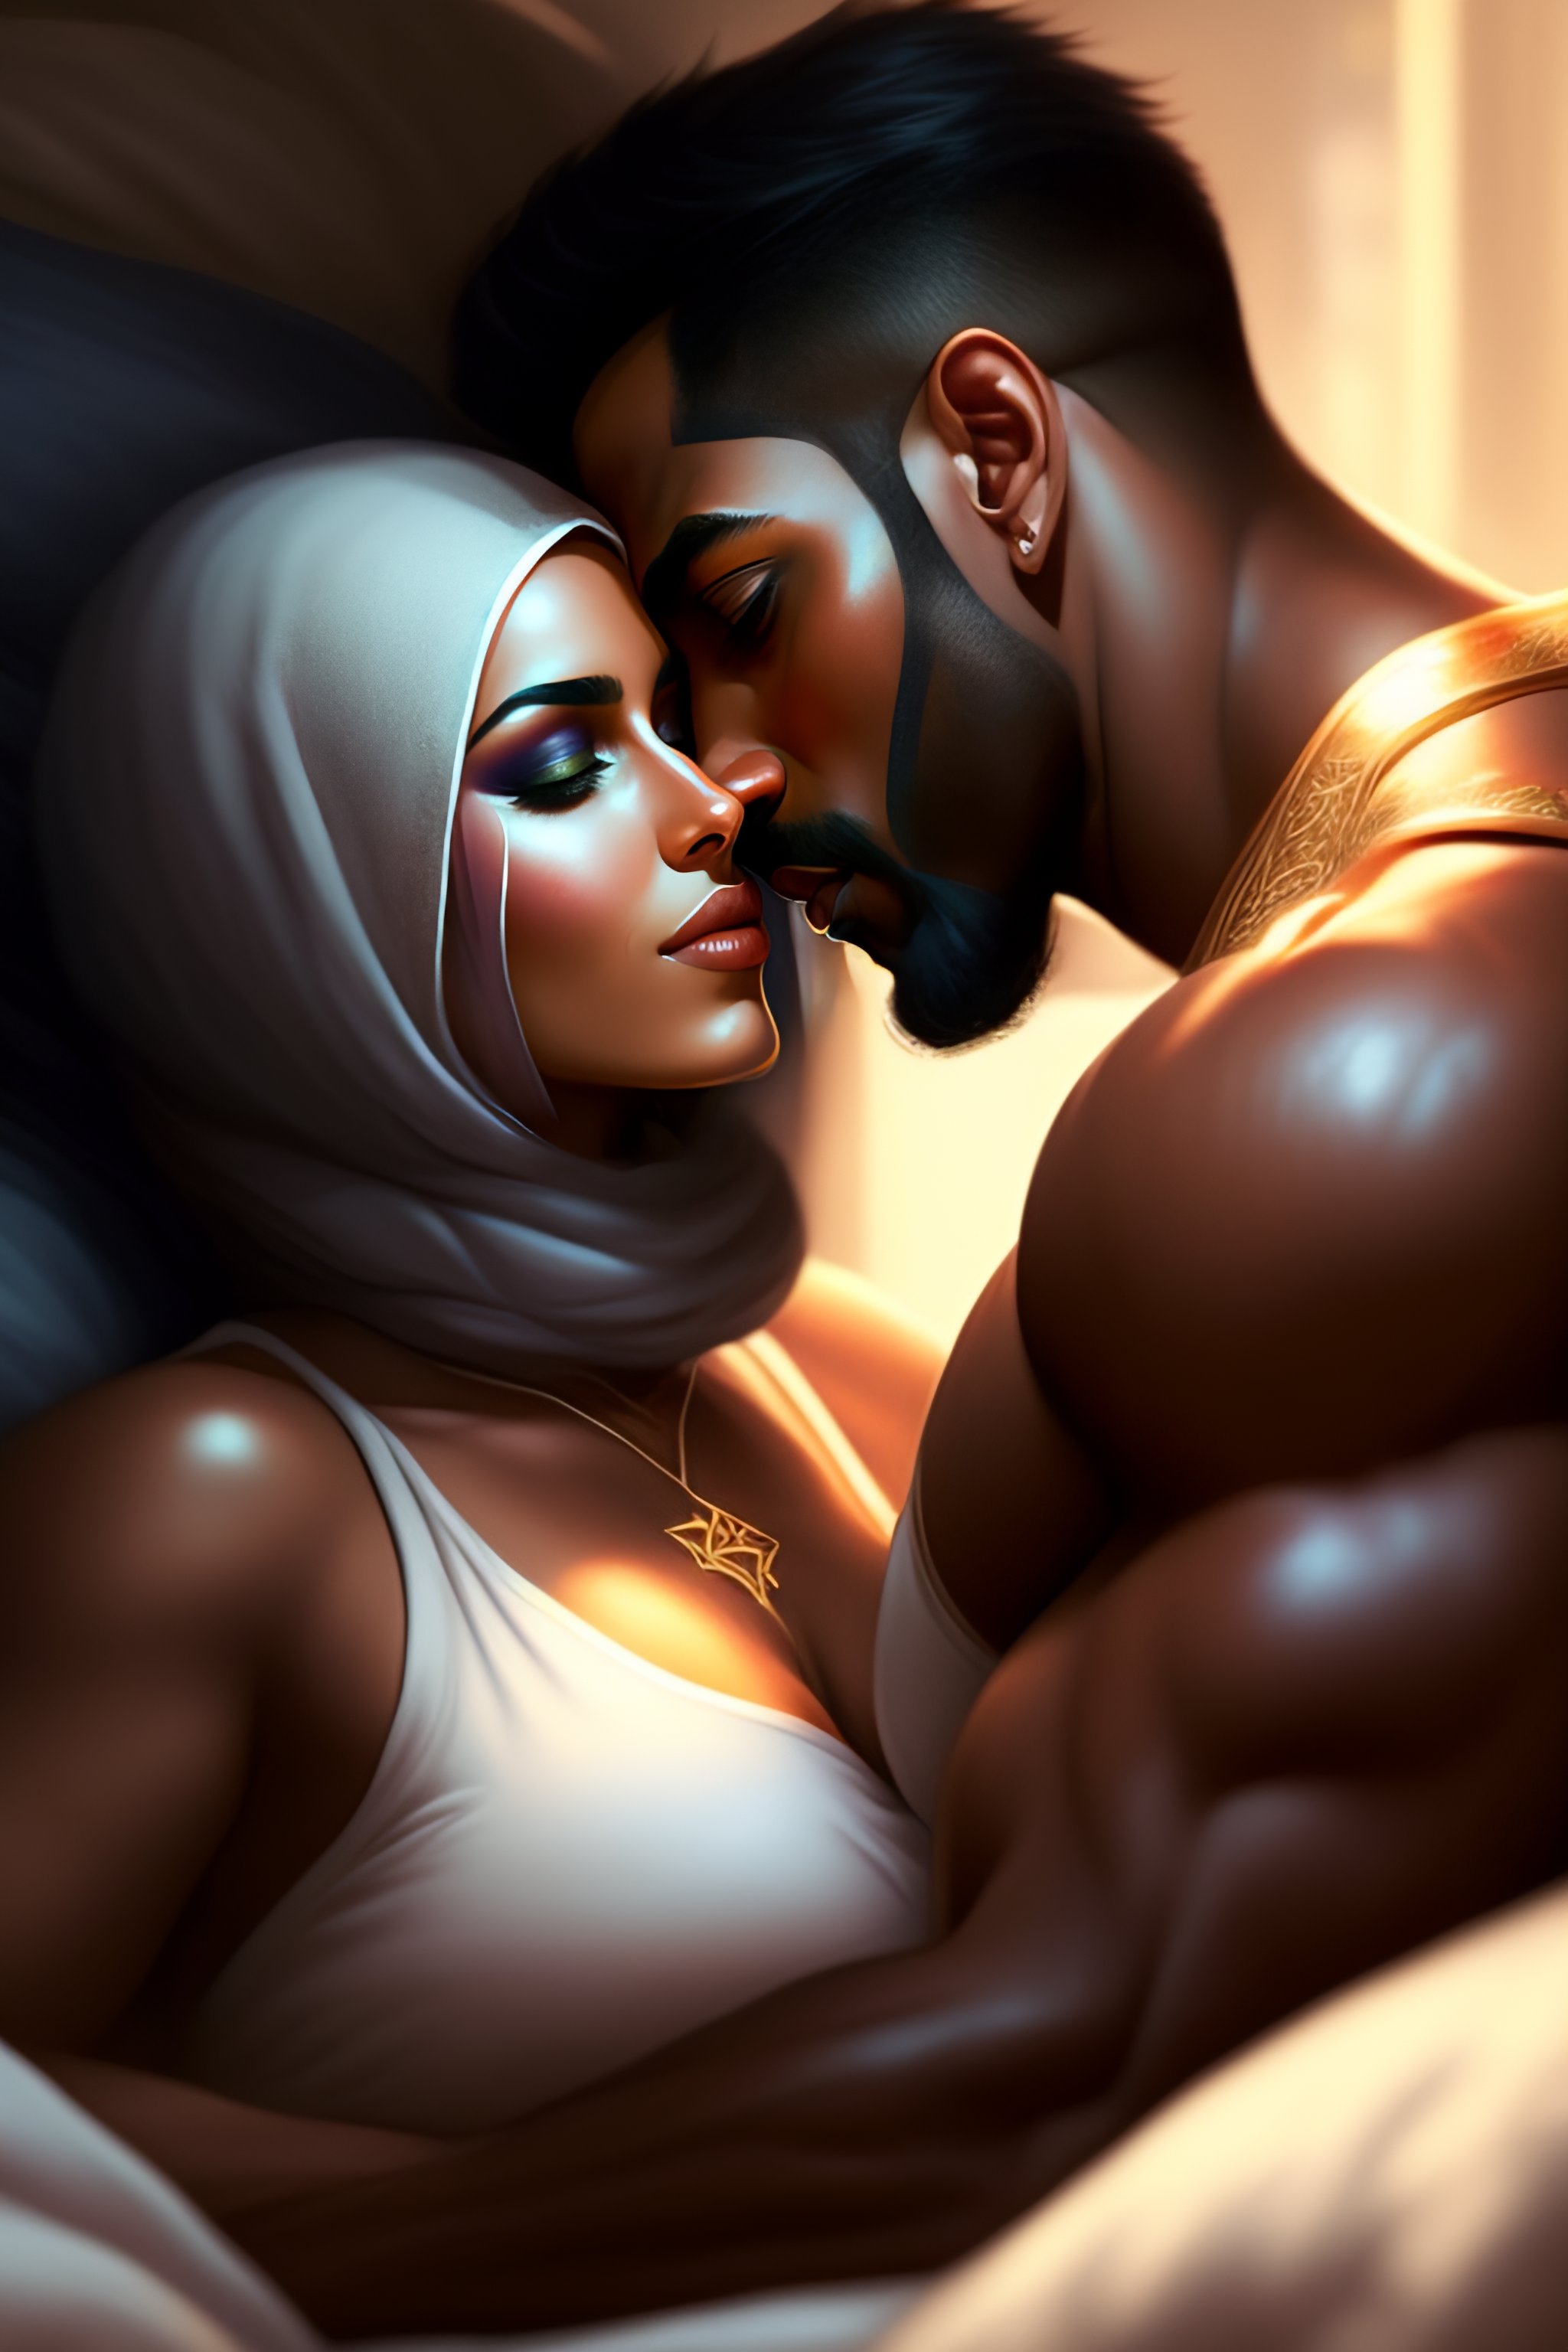 Hijabi sex - Best photos on tibornemes.com